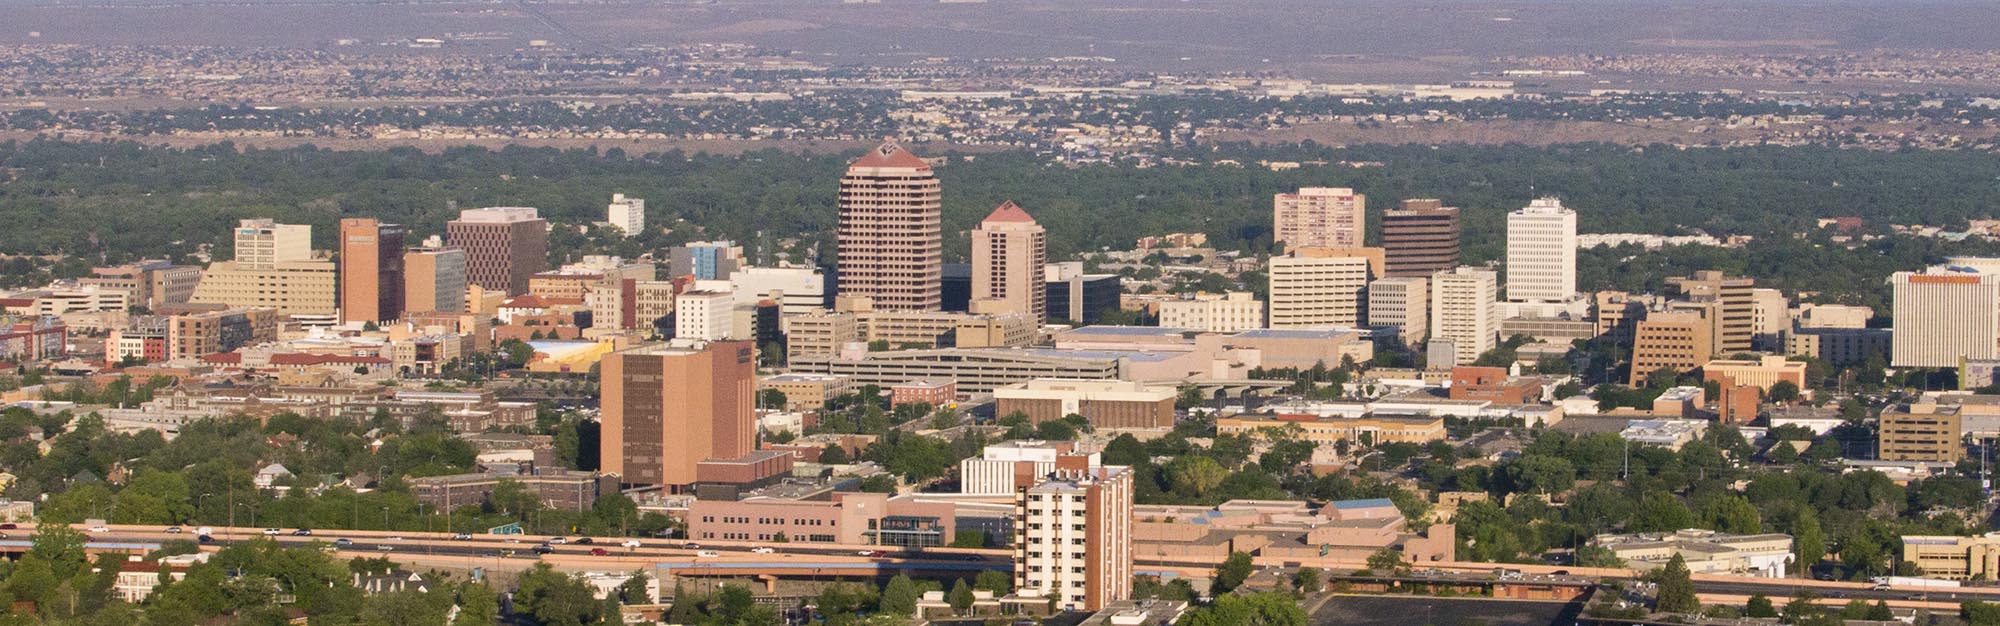 Vista aérea do centro de Albuquerque